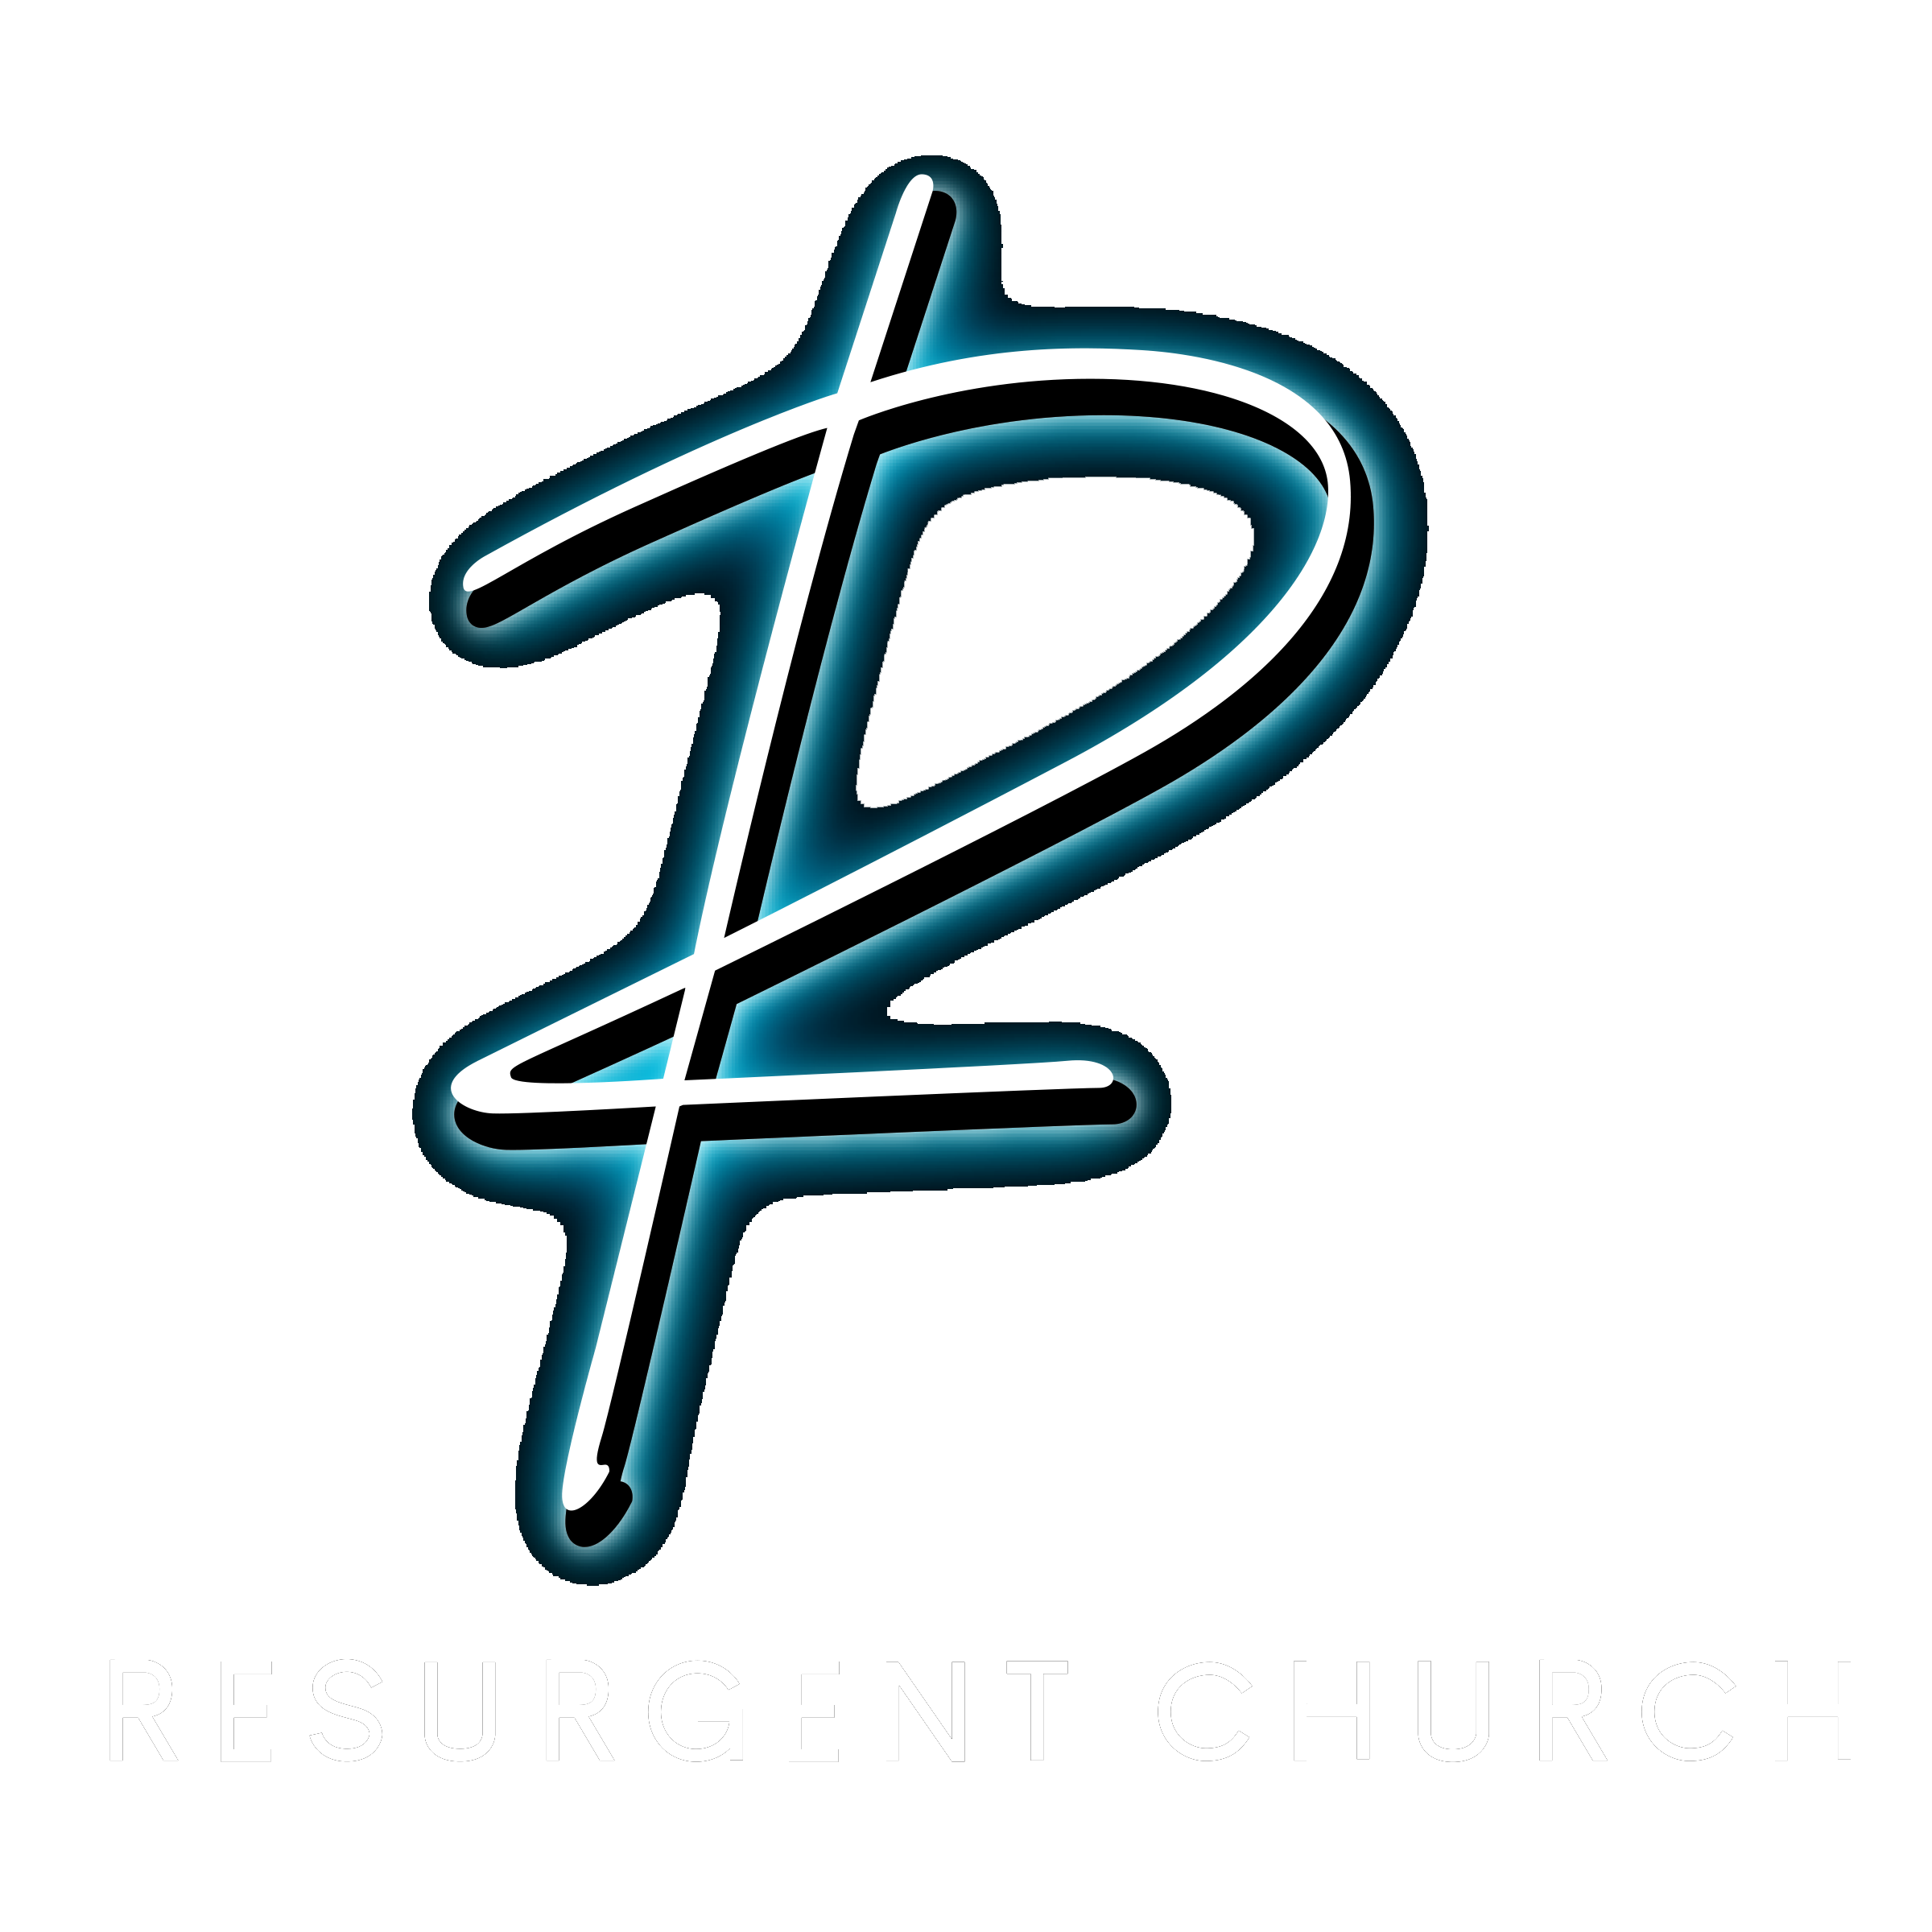 Resurgent Church